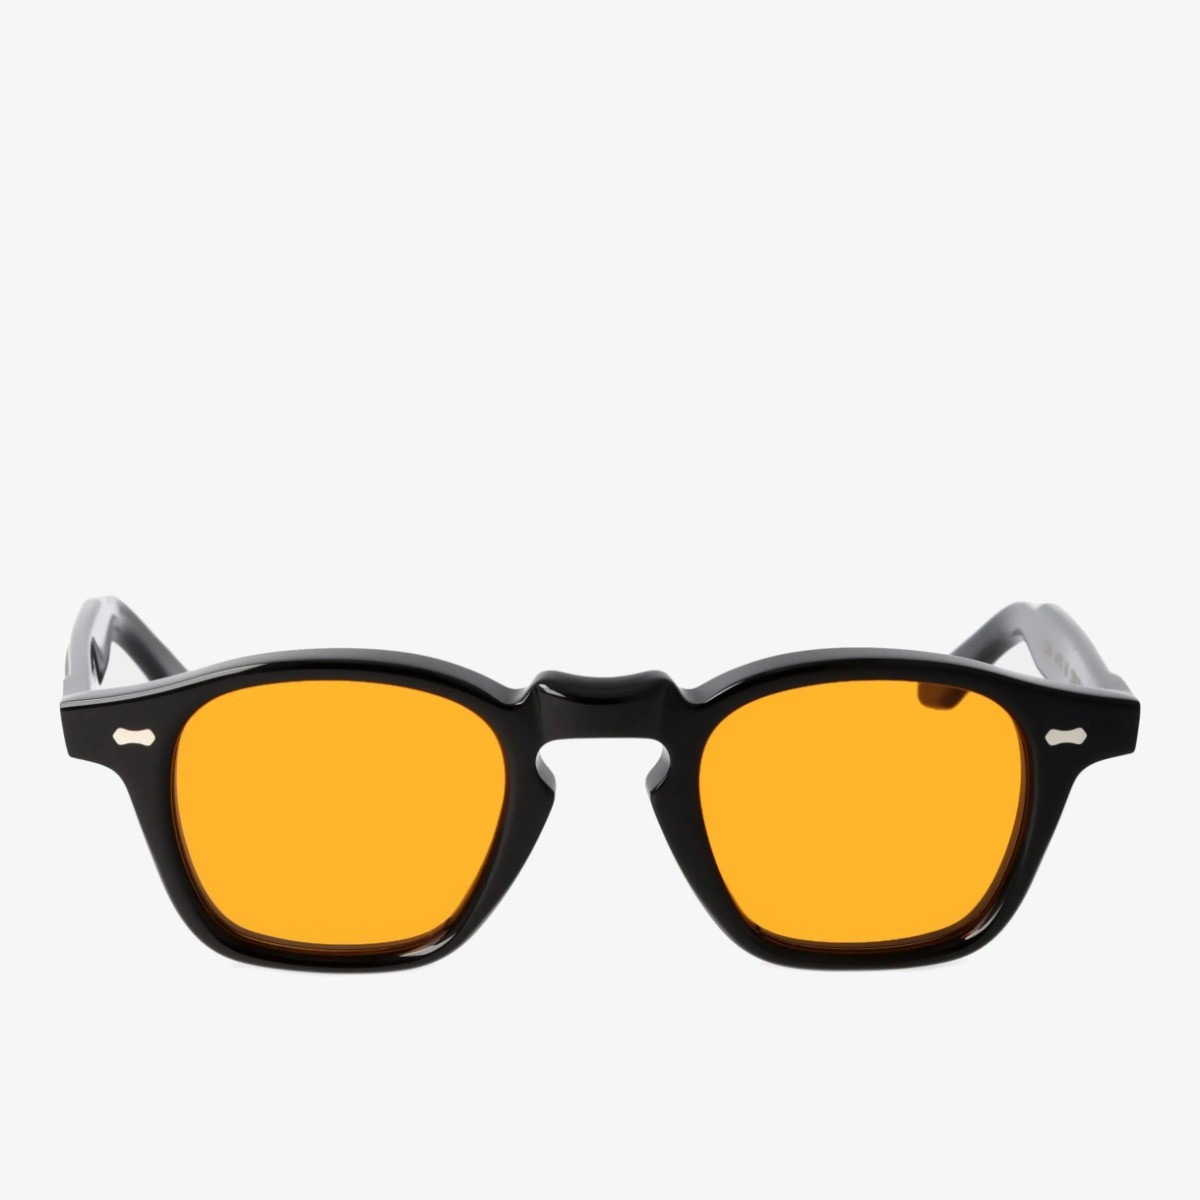 TBD Eyewear Cord black frame orange lenses sunglasses